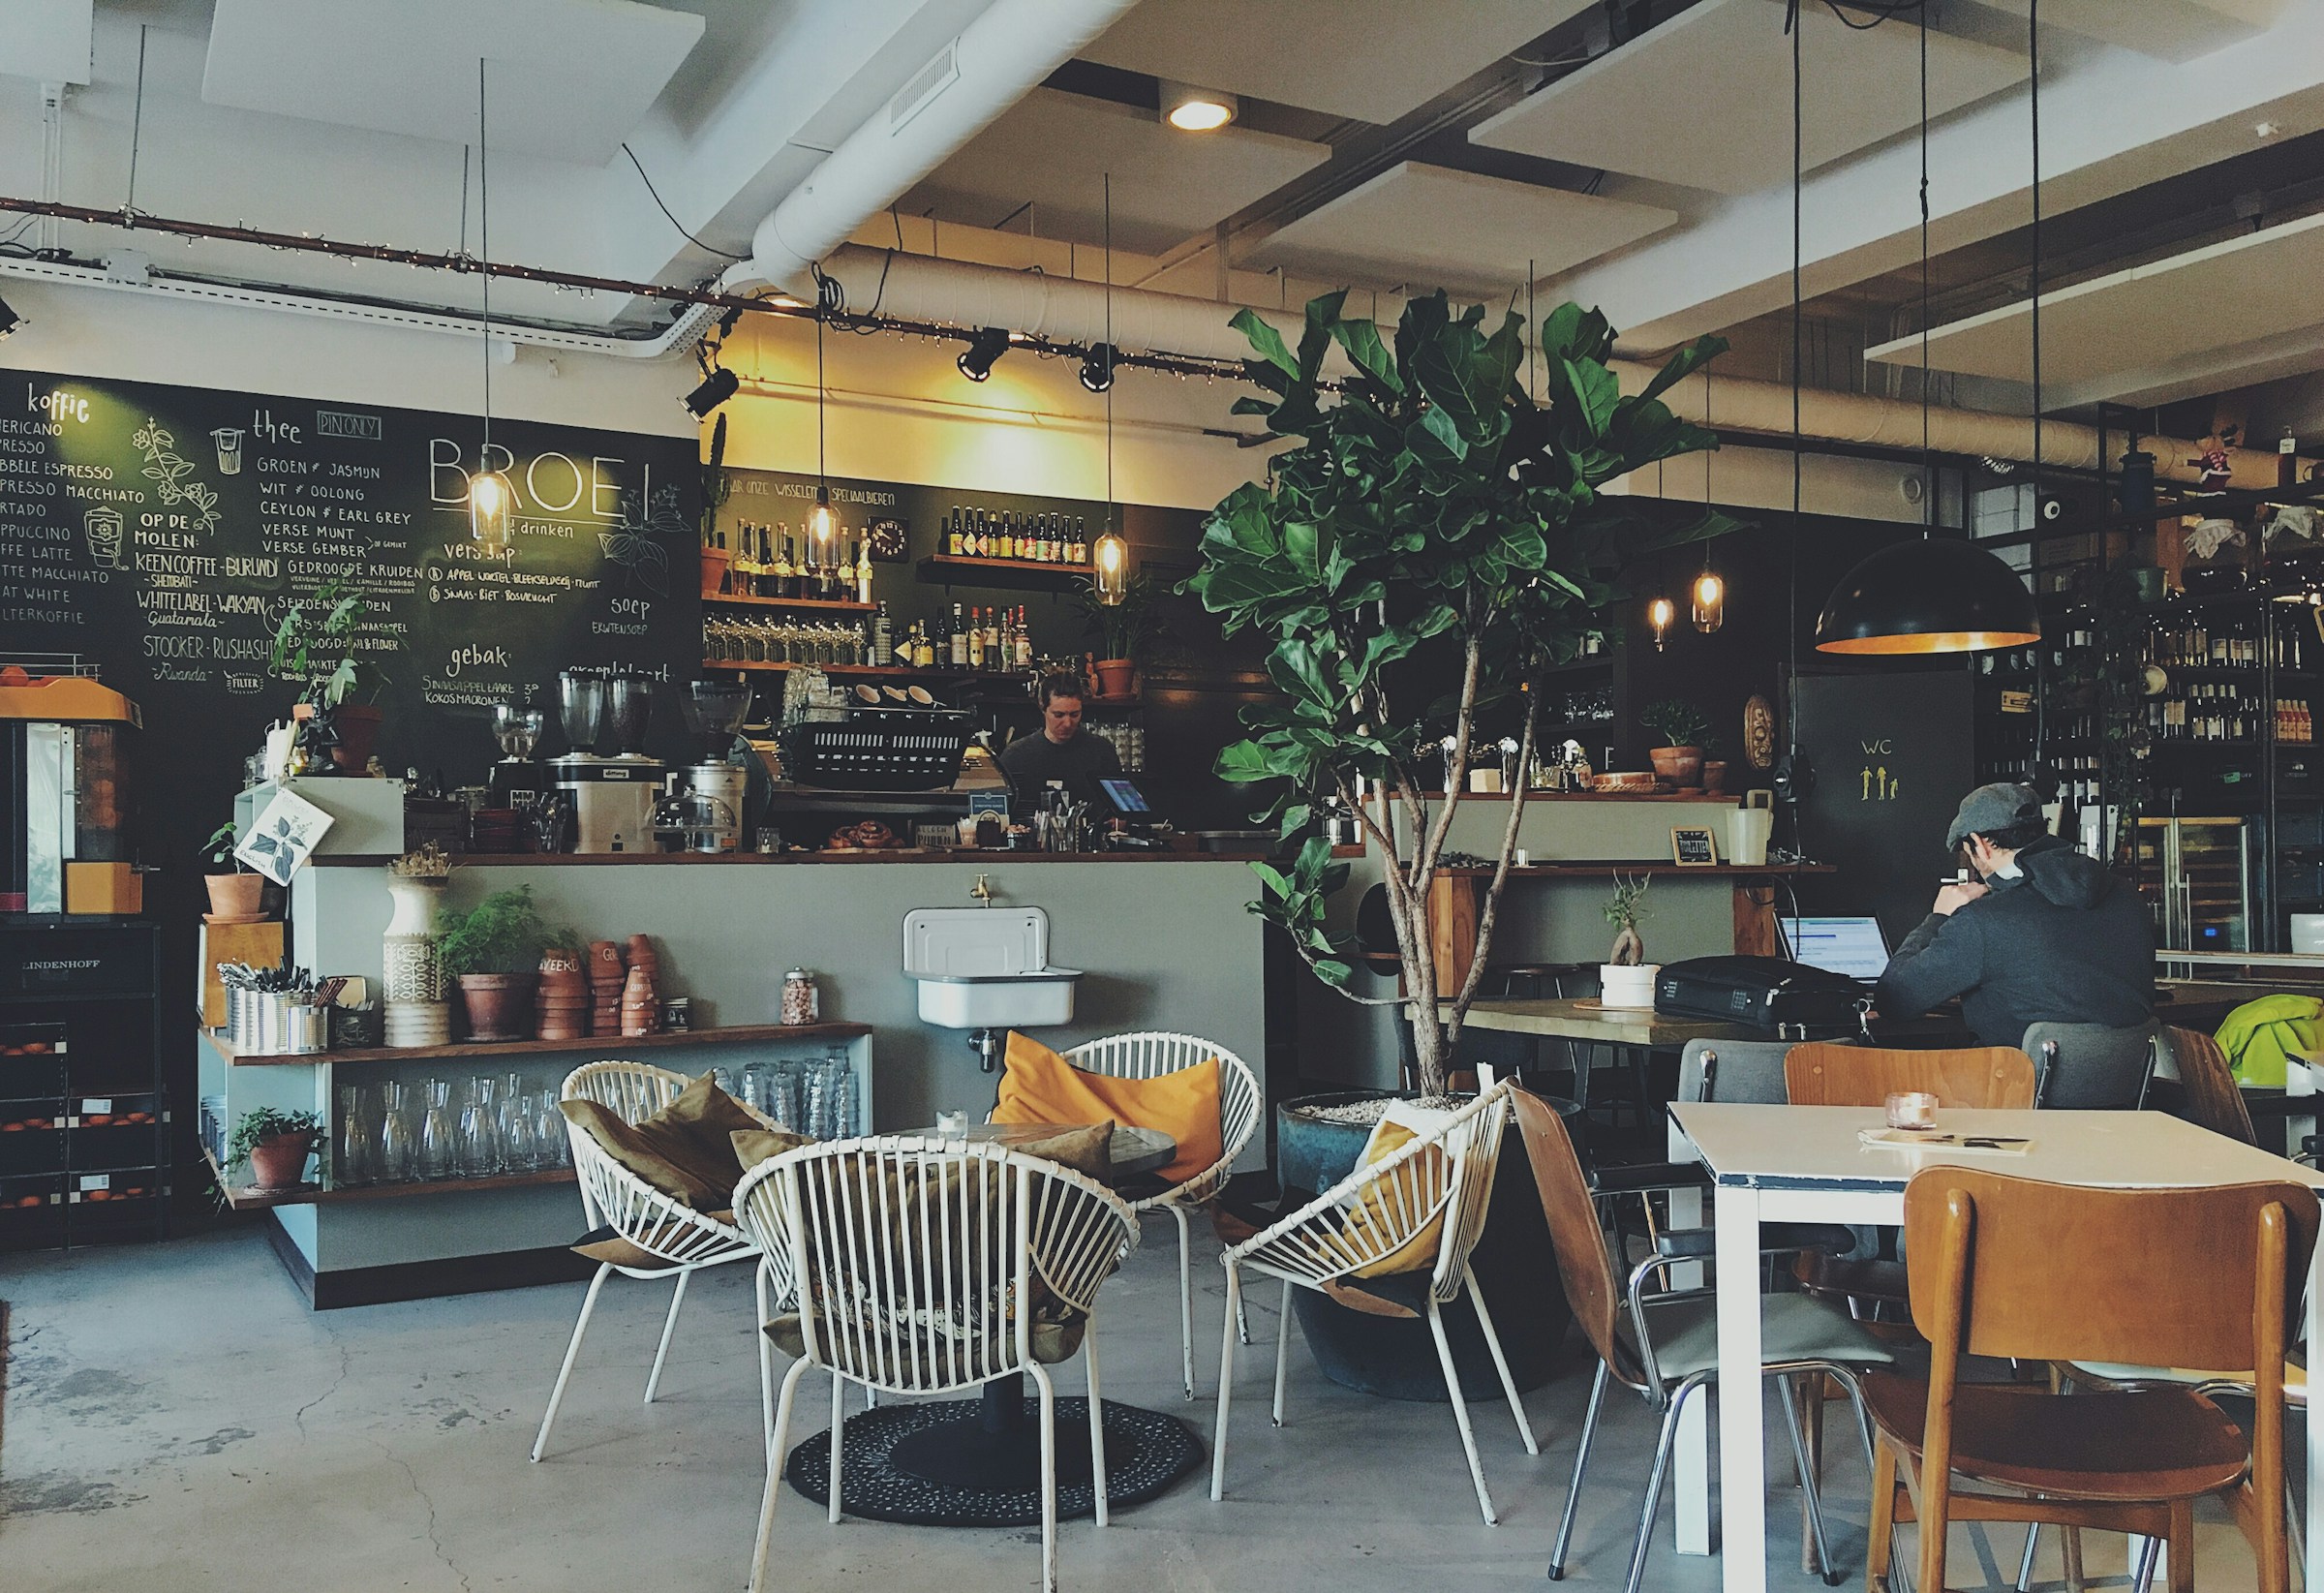 An interior of a coffee shop | Source: Unsplash